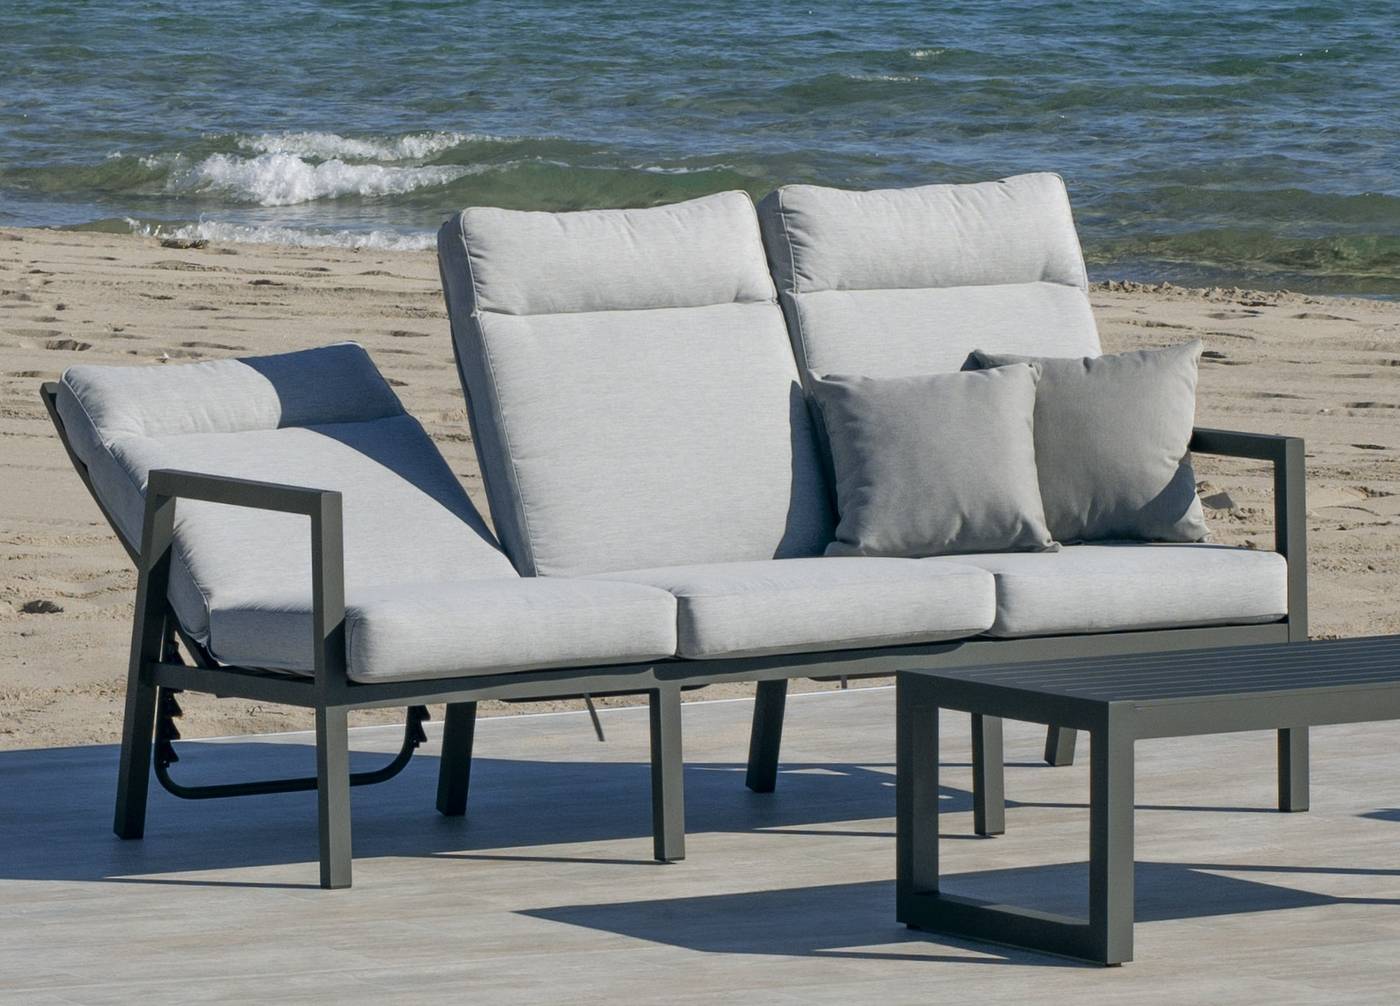 Set Aluminio Voriam-8 - Conjunto aluminio: sofá 3 plazas + 2 sillones + mesa de centro. Respaldos reclinables. Colores: blanco, plata, antracita o bronce.